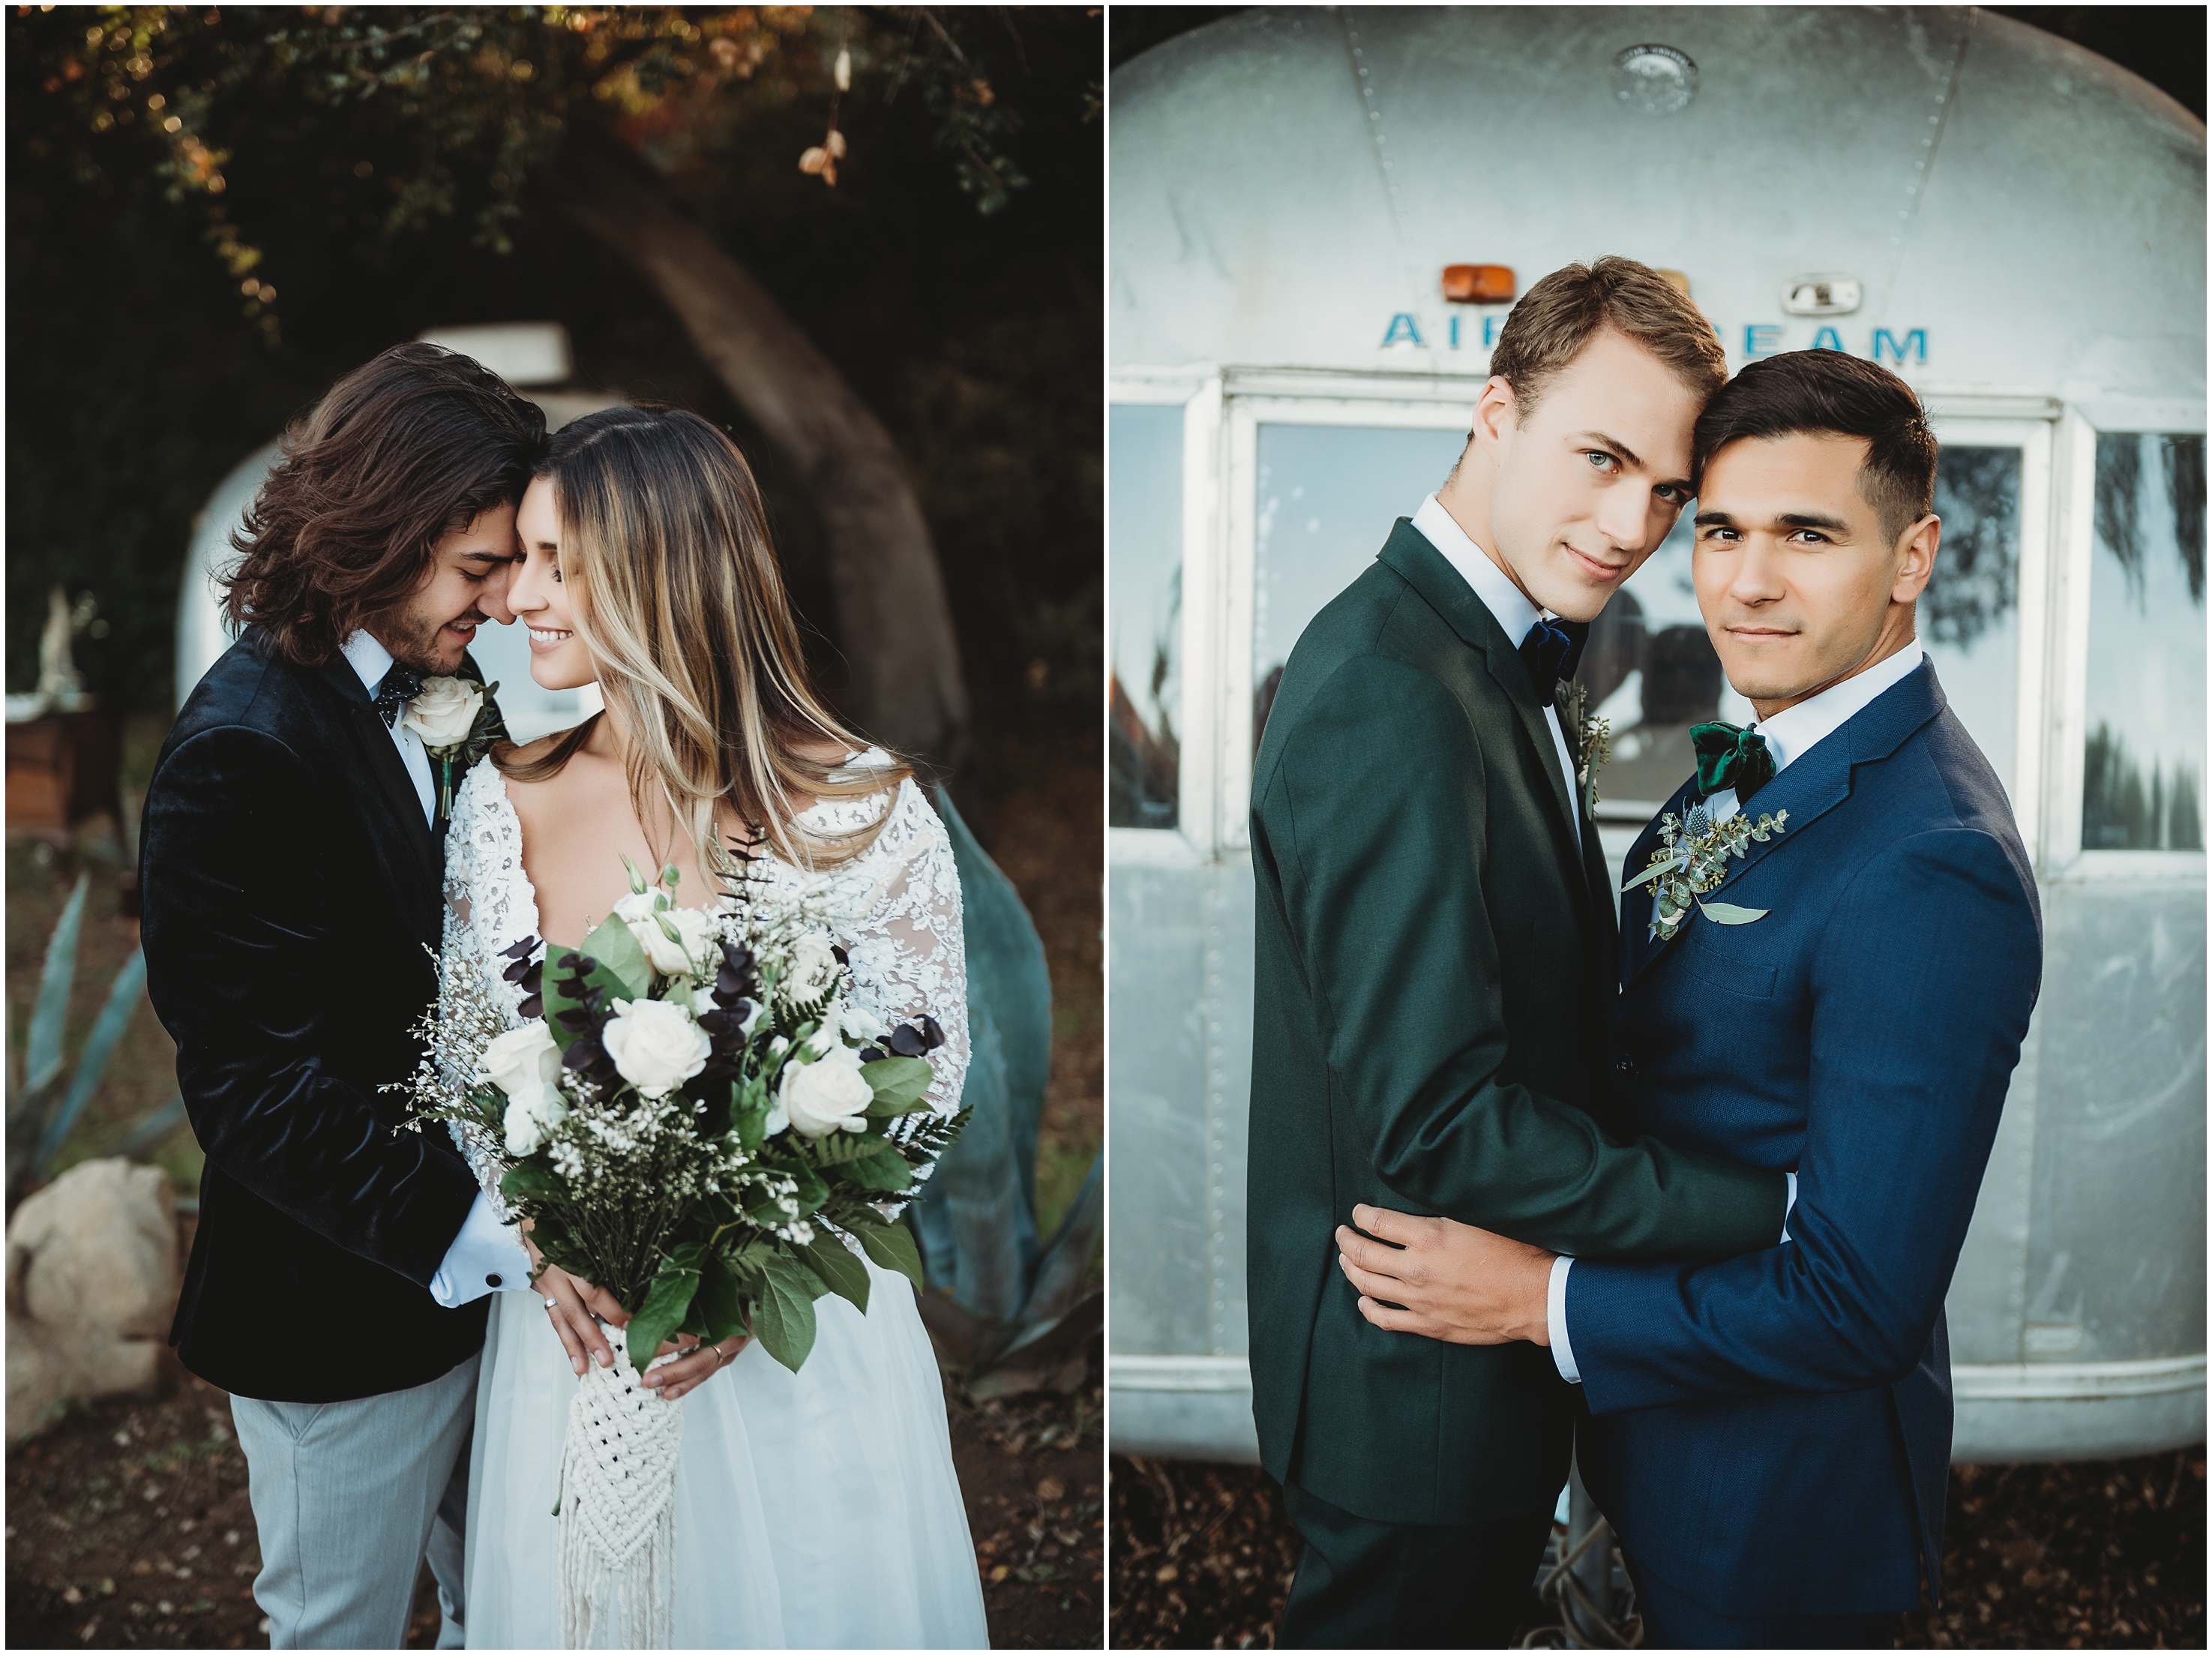 Retro Ranch editorial wedding featuring same sex couple and bride & groom.